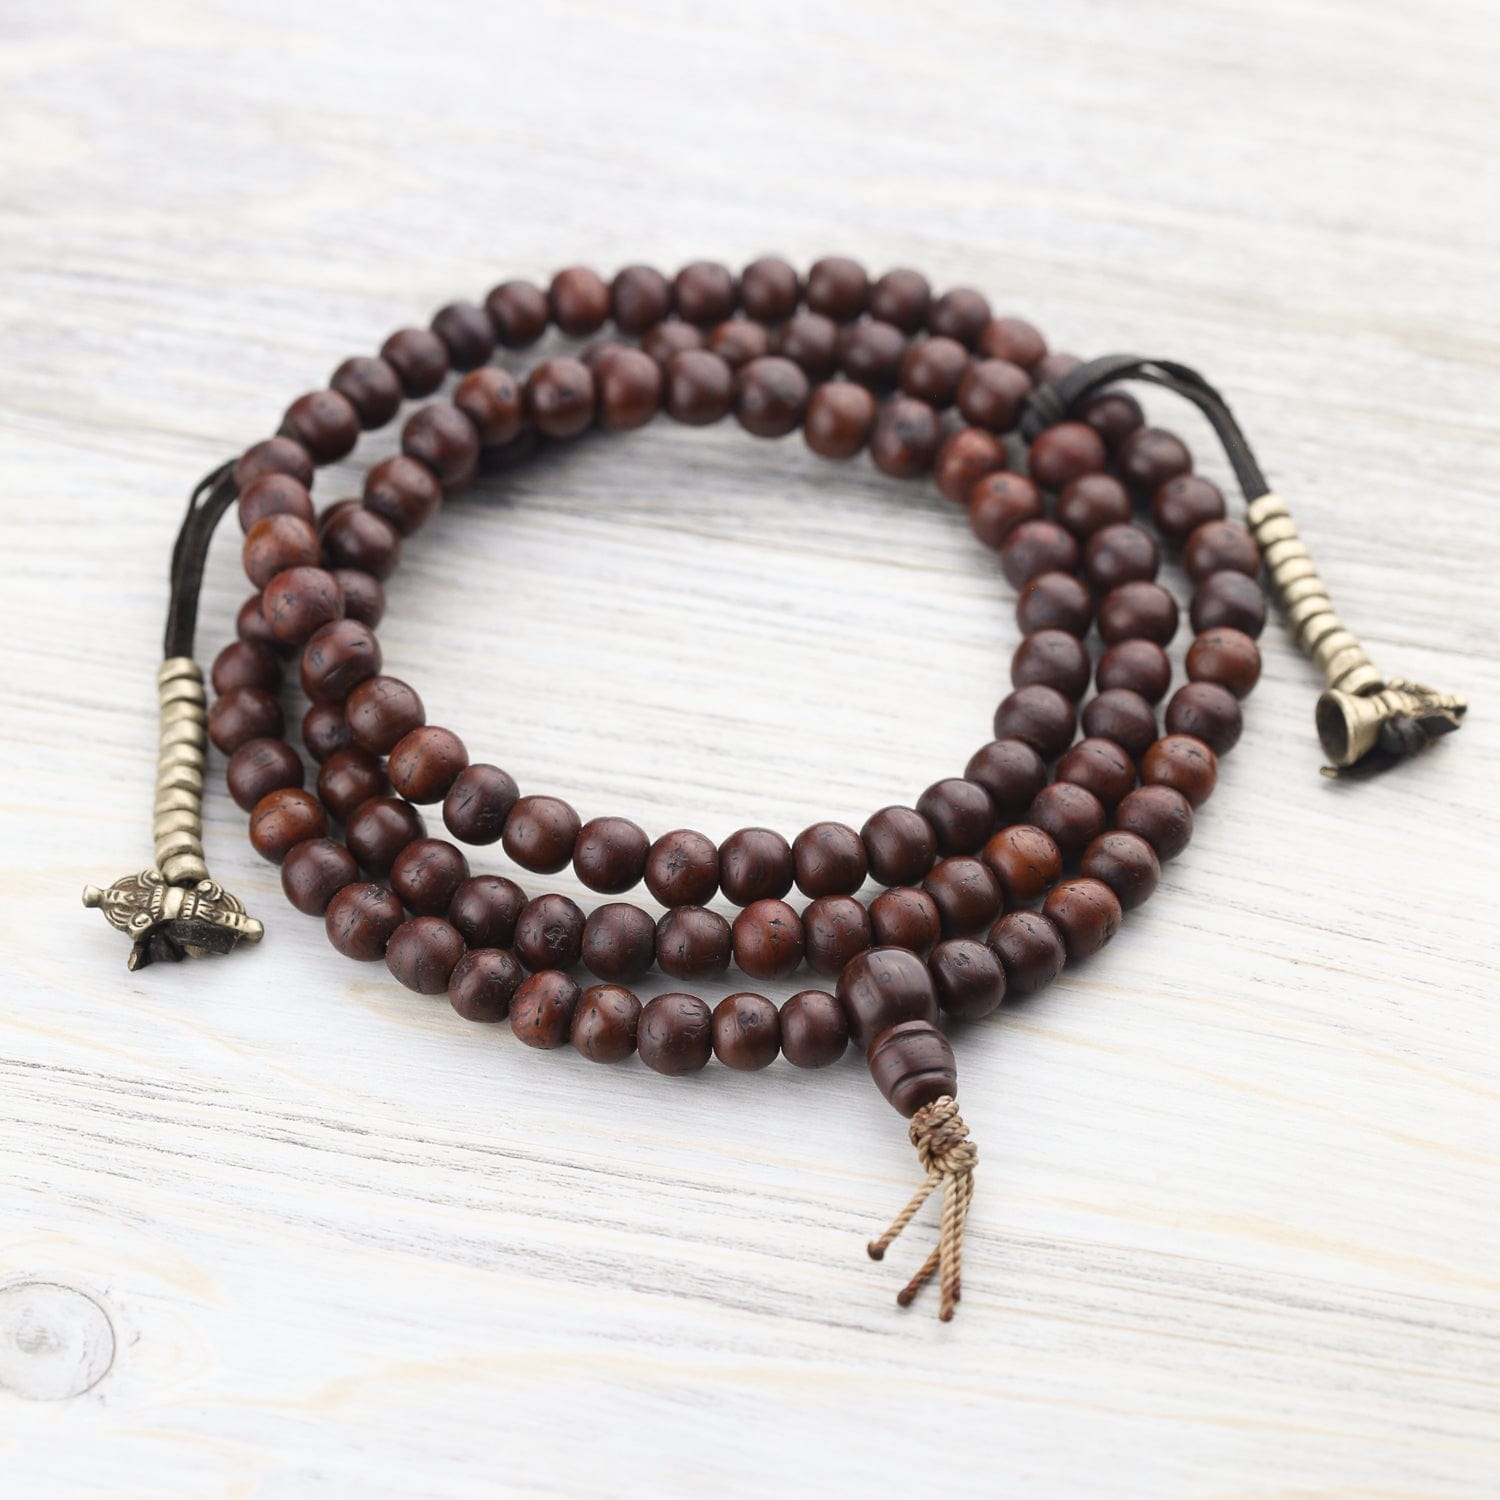 Black Agate Tibetan Buddhist Prayer Beads Mala Bracelet Buddha Word Lotus  Tools & Home Improvement